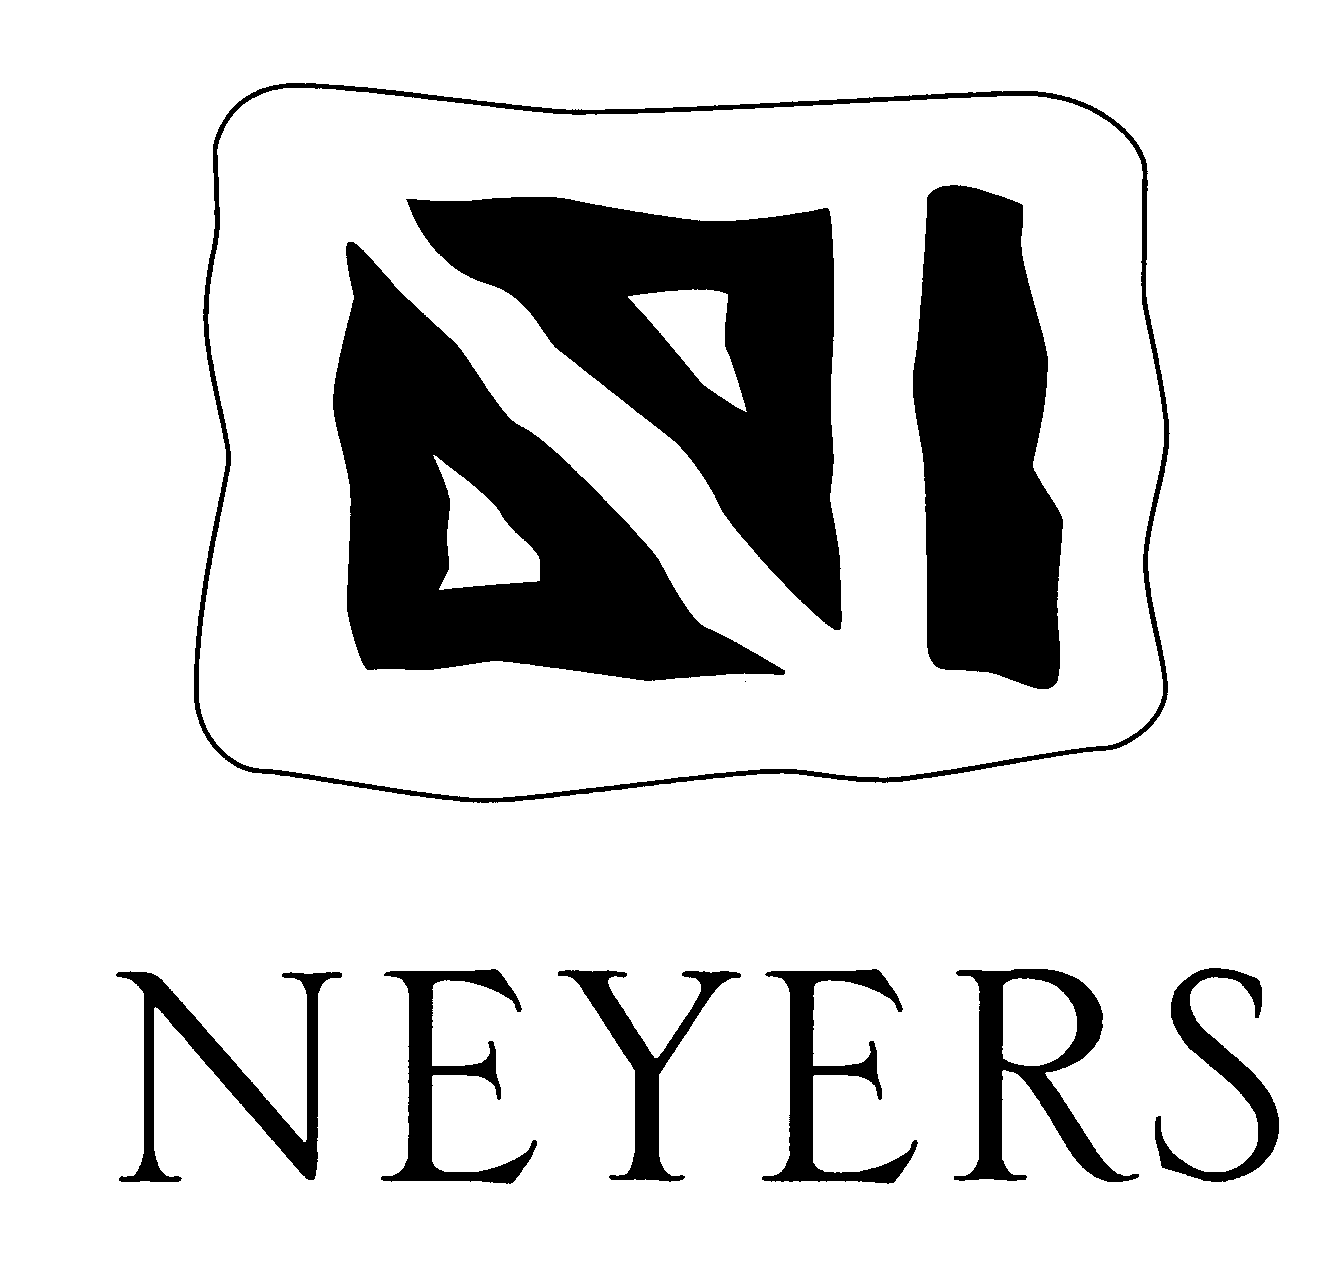  NEYERS